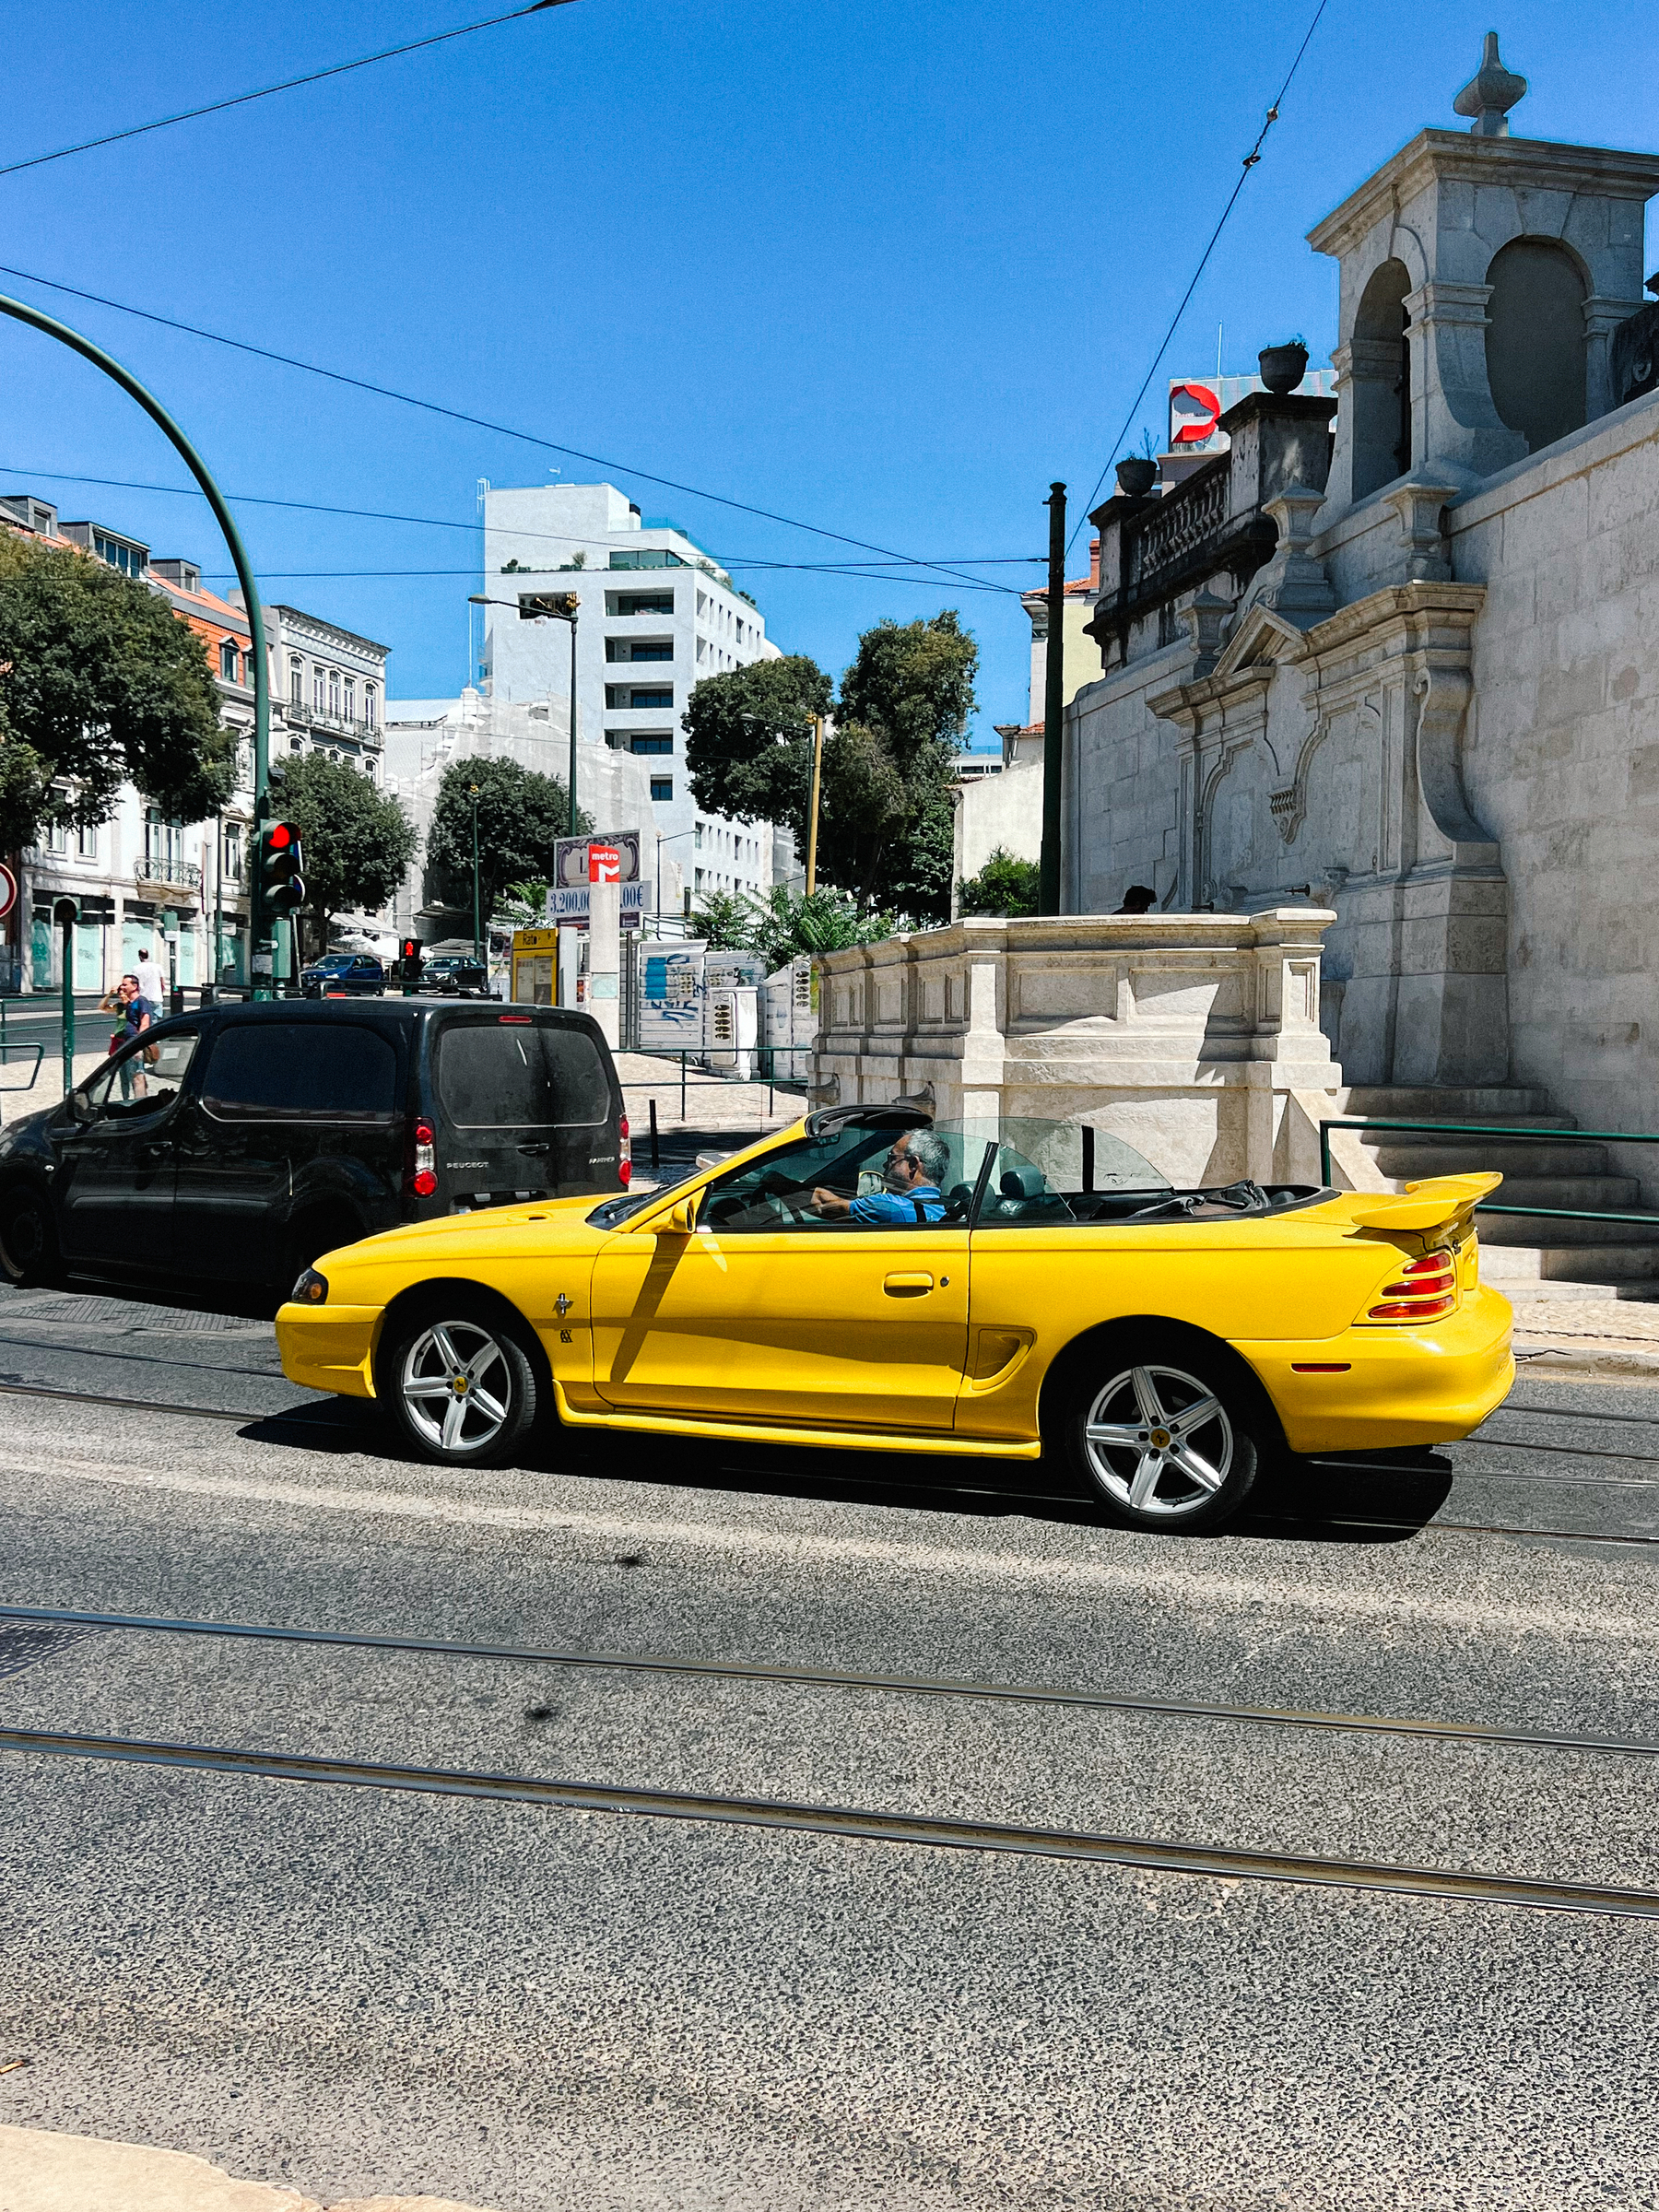 A yellow, convertible, Mustang. 